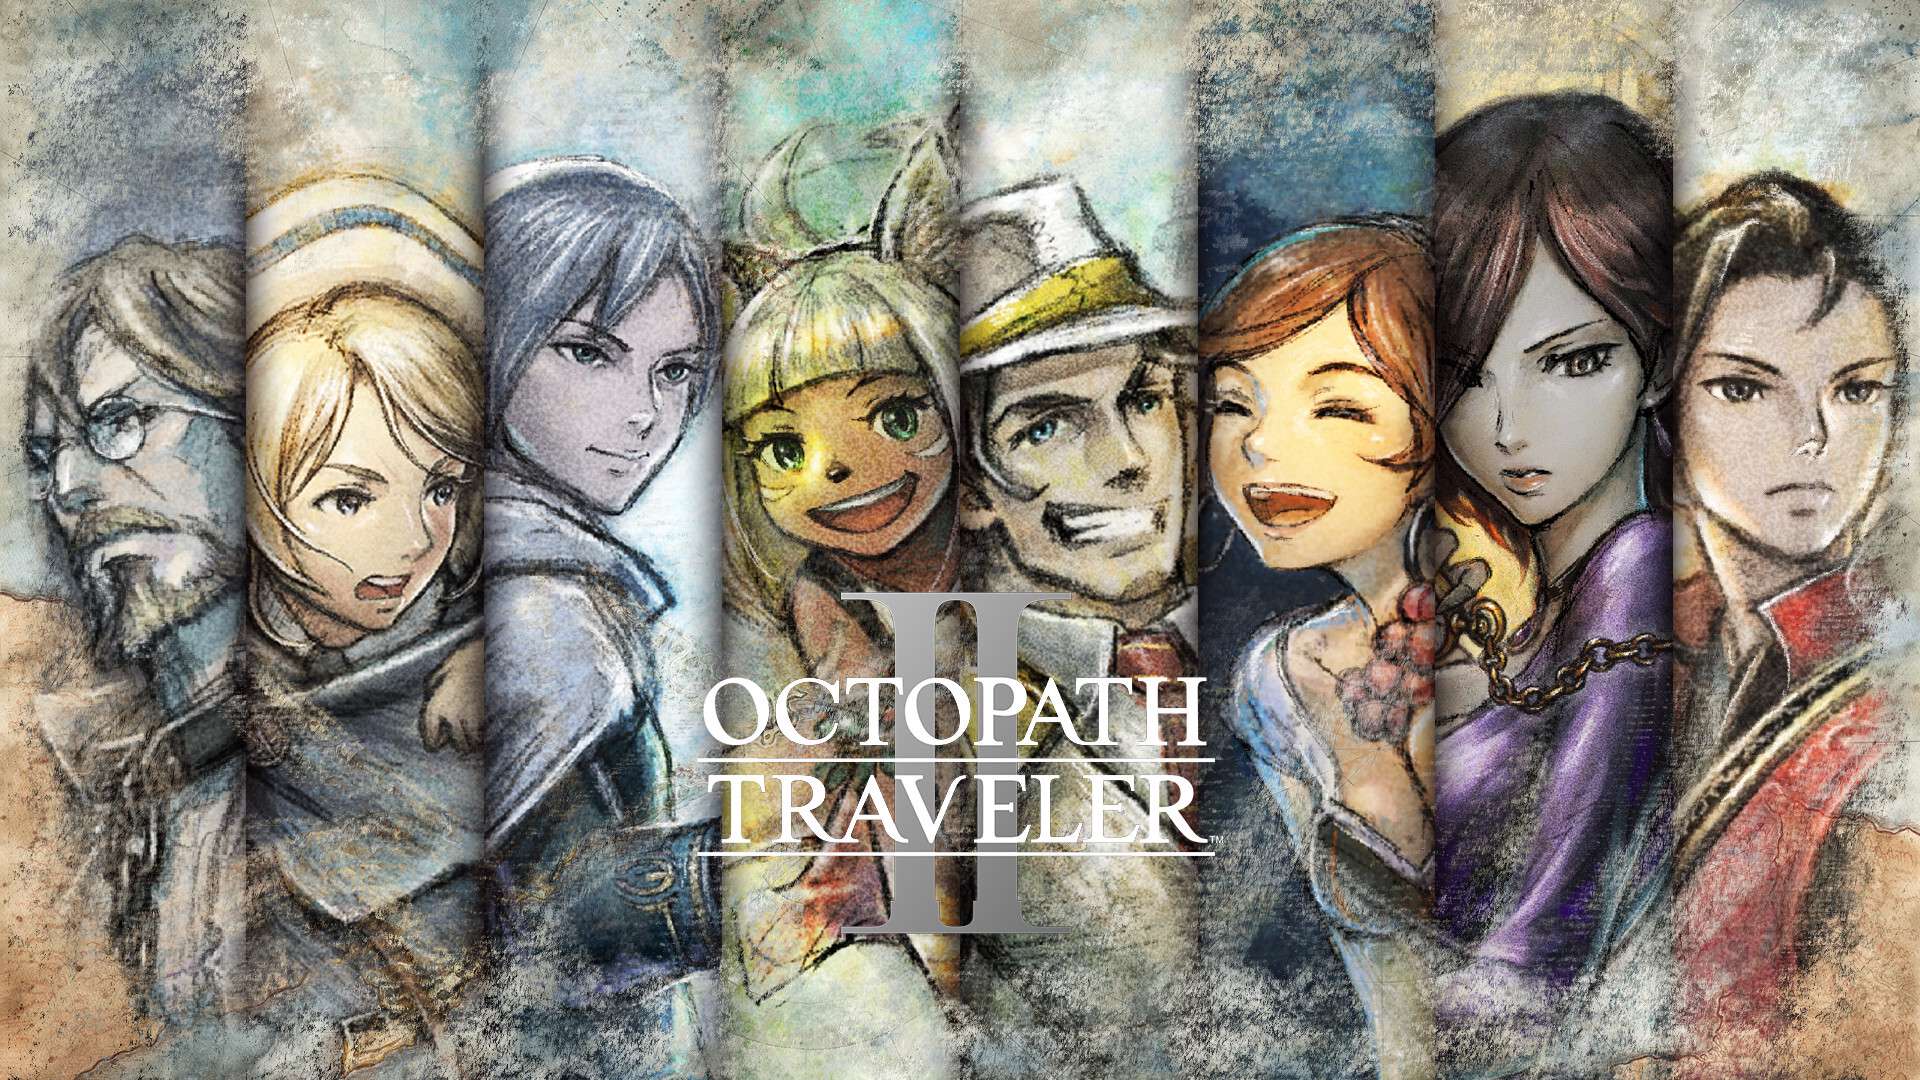 OCTOPATH TRAVELER II Original Soundtrack